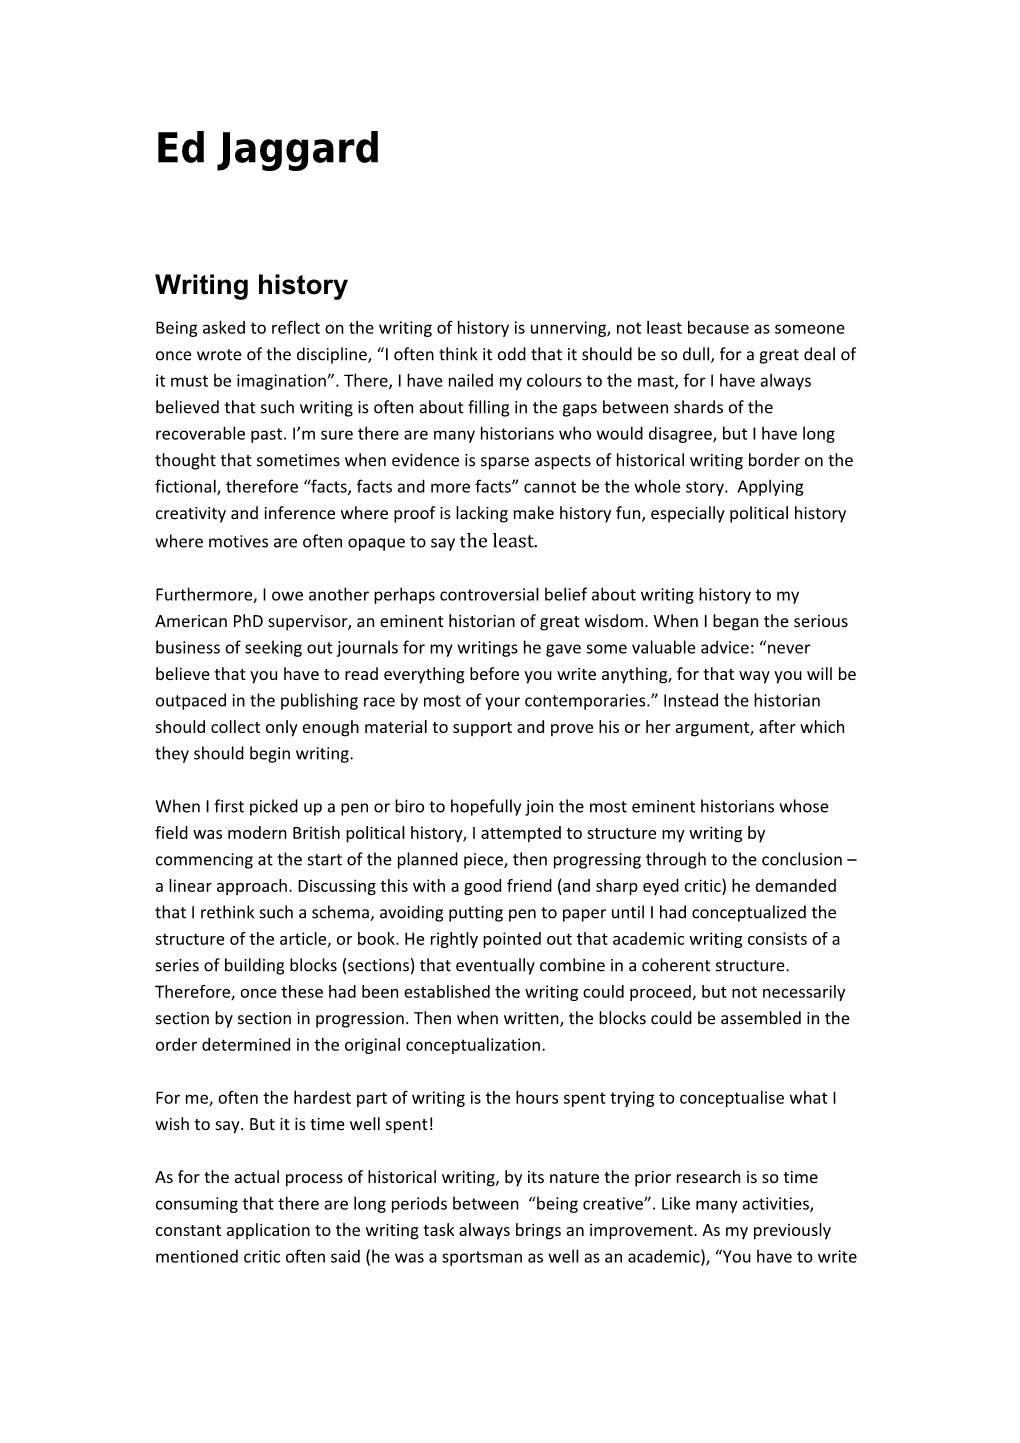 Writing History